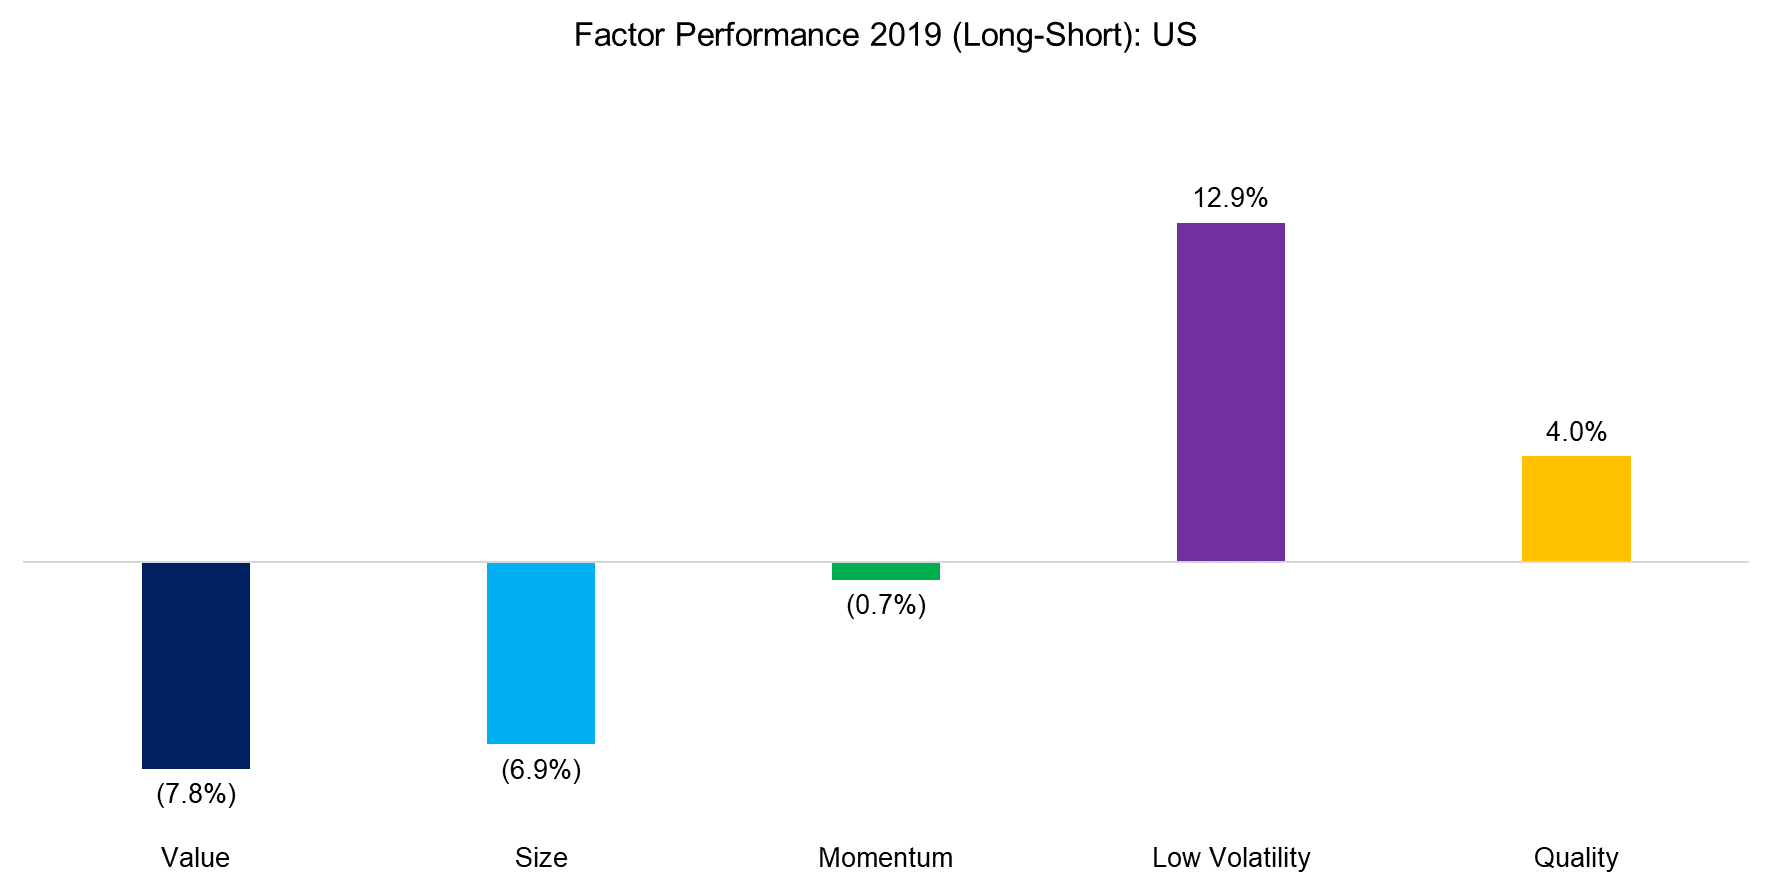 Factor Performance 2019 (Long-Short) US